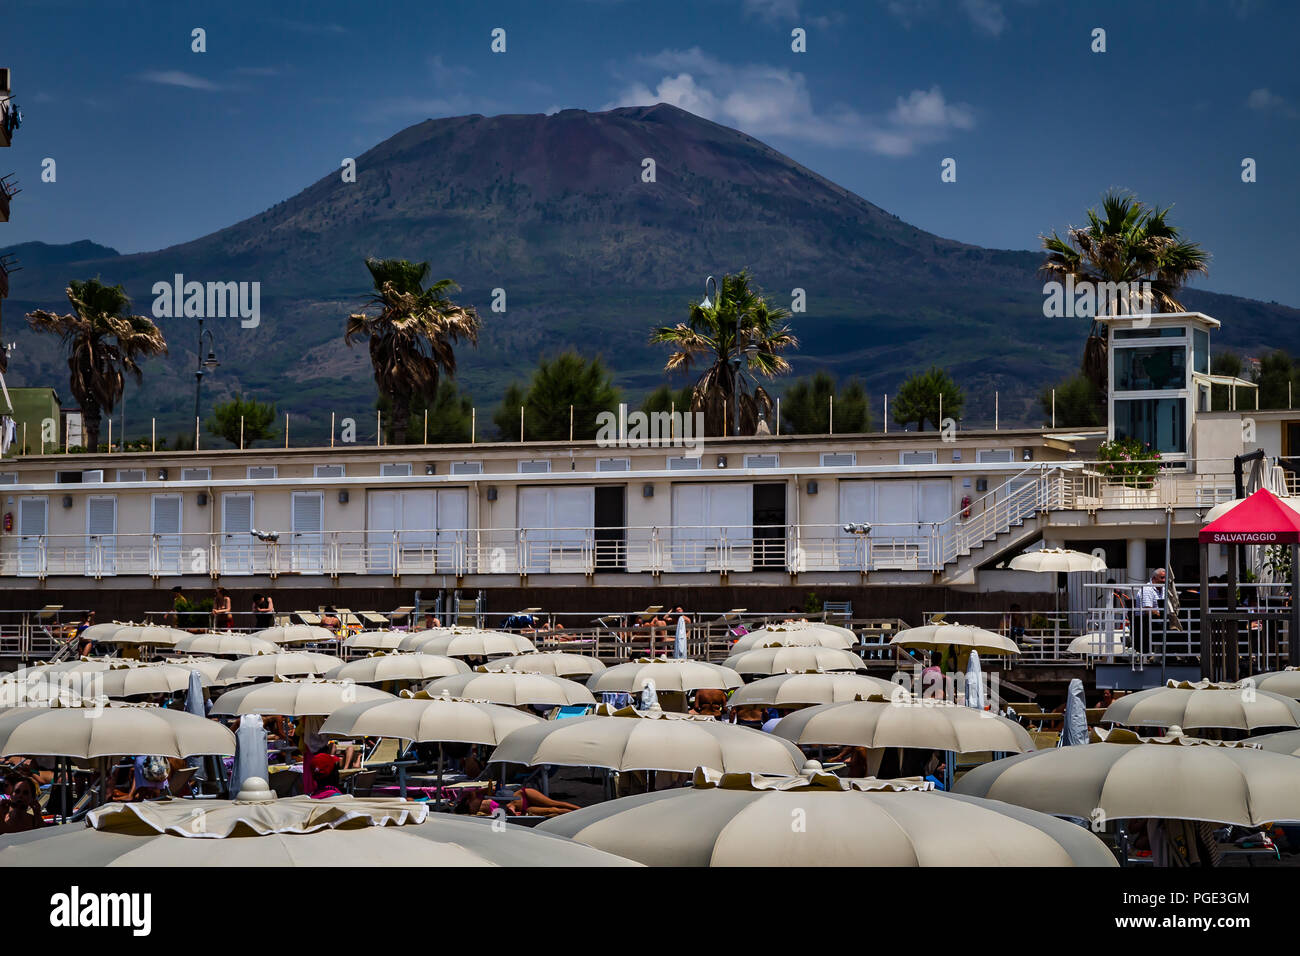 Torre del Greco, near Naples, Italy - June 3, 2018 - view of Vesuvius volcano from the beach Stock Photo